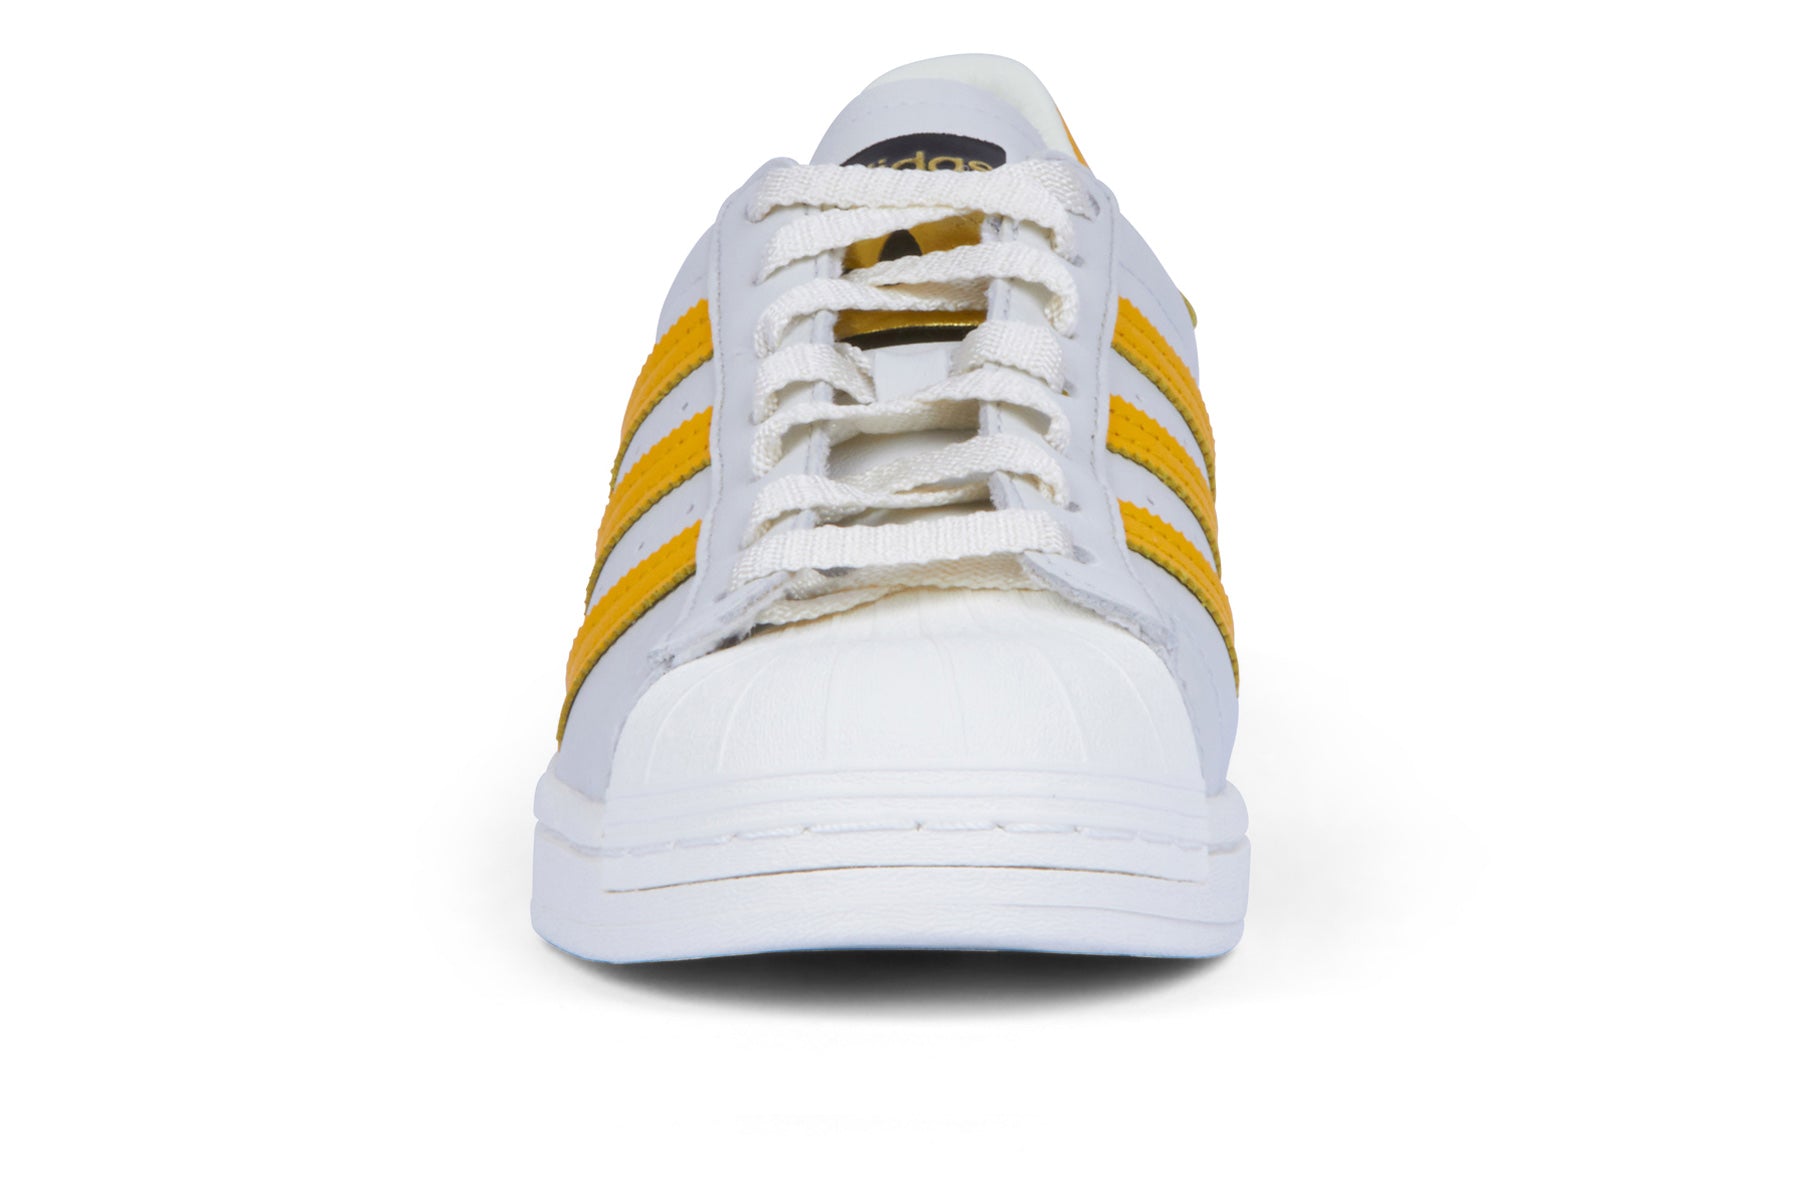 Adidas Superstar - Off White / Collegiate Gold / Off White